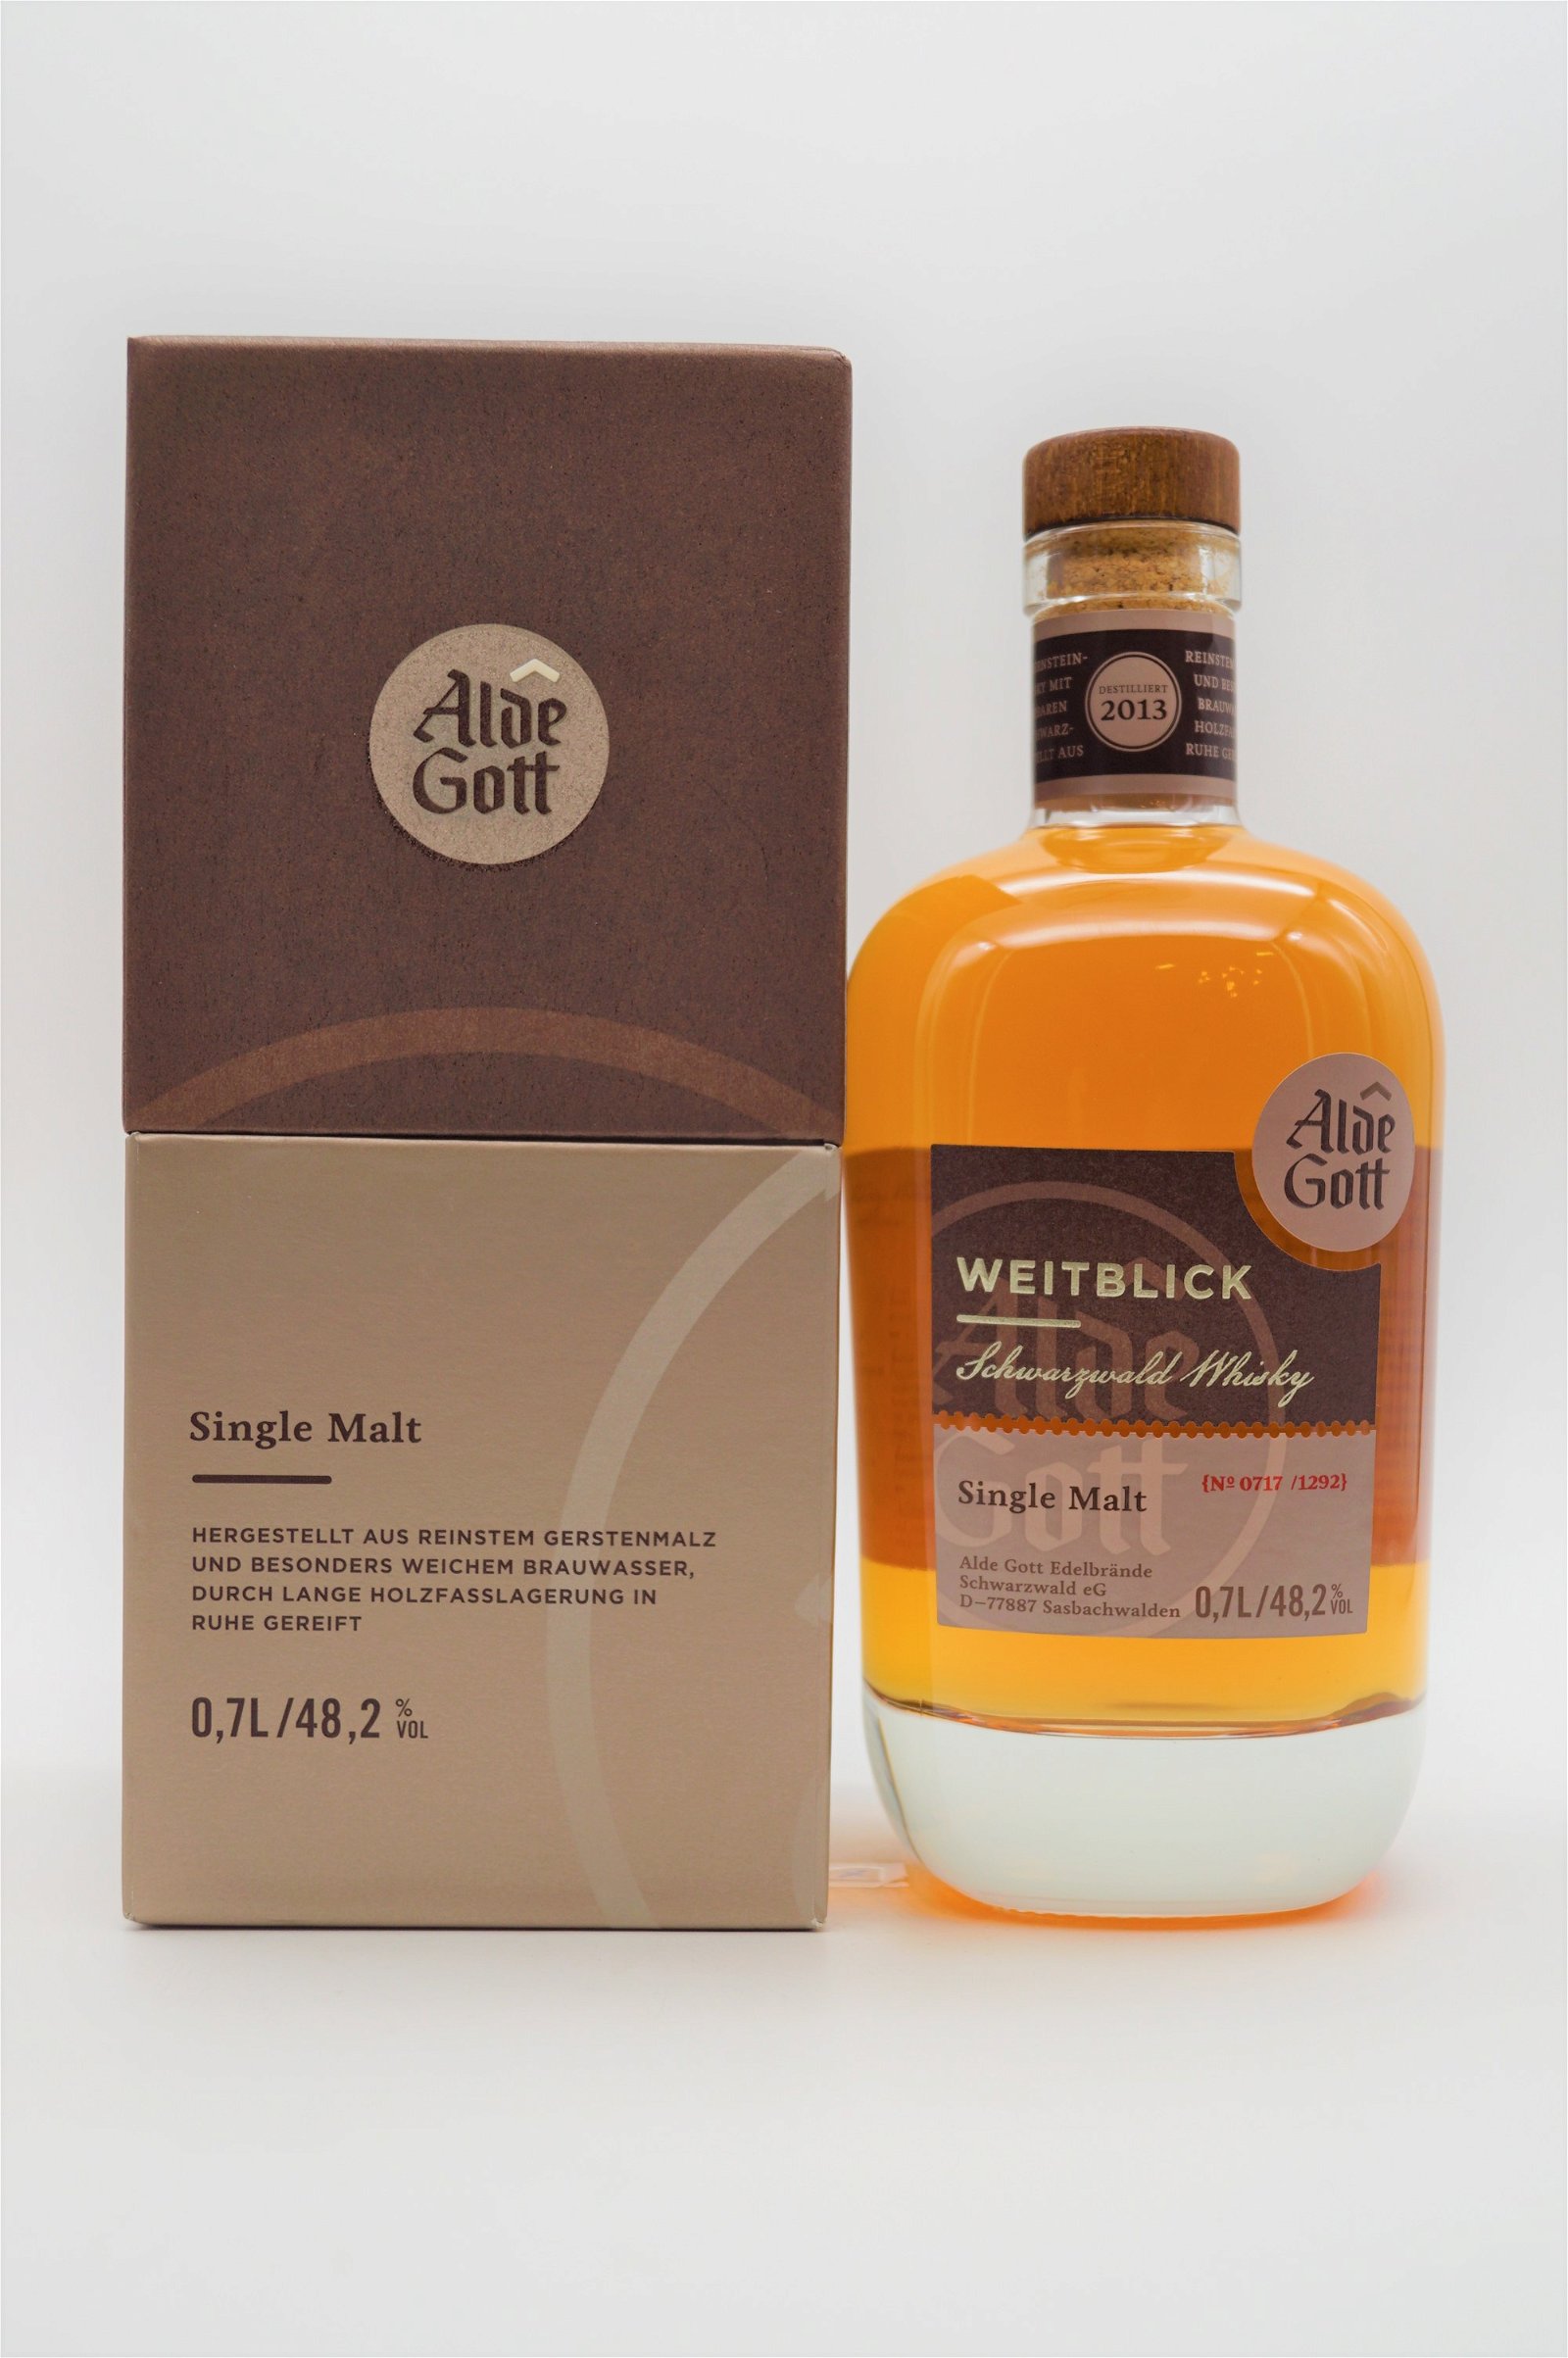 Alde Gott Weitblick Schwarzwald Single Malt Whisky